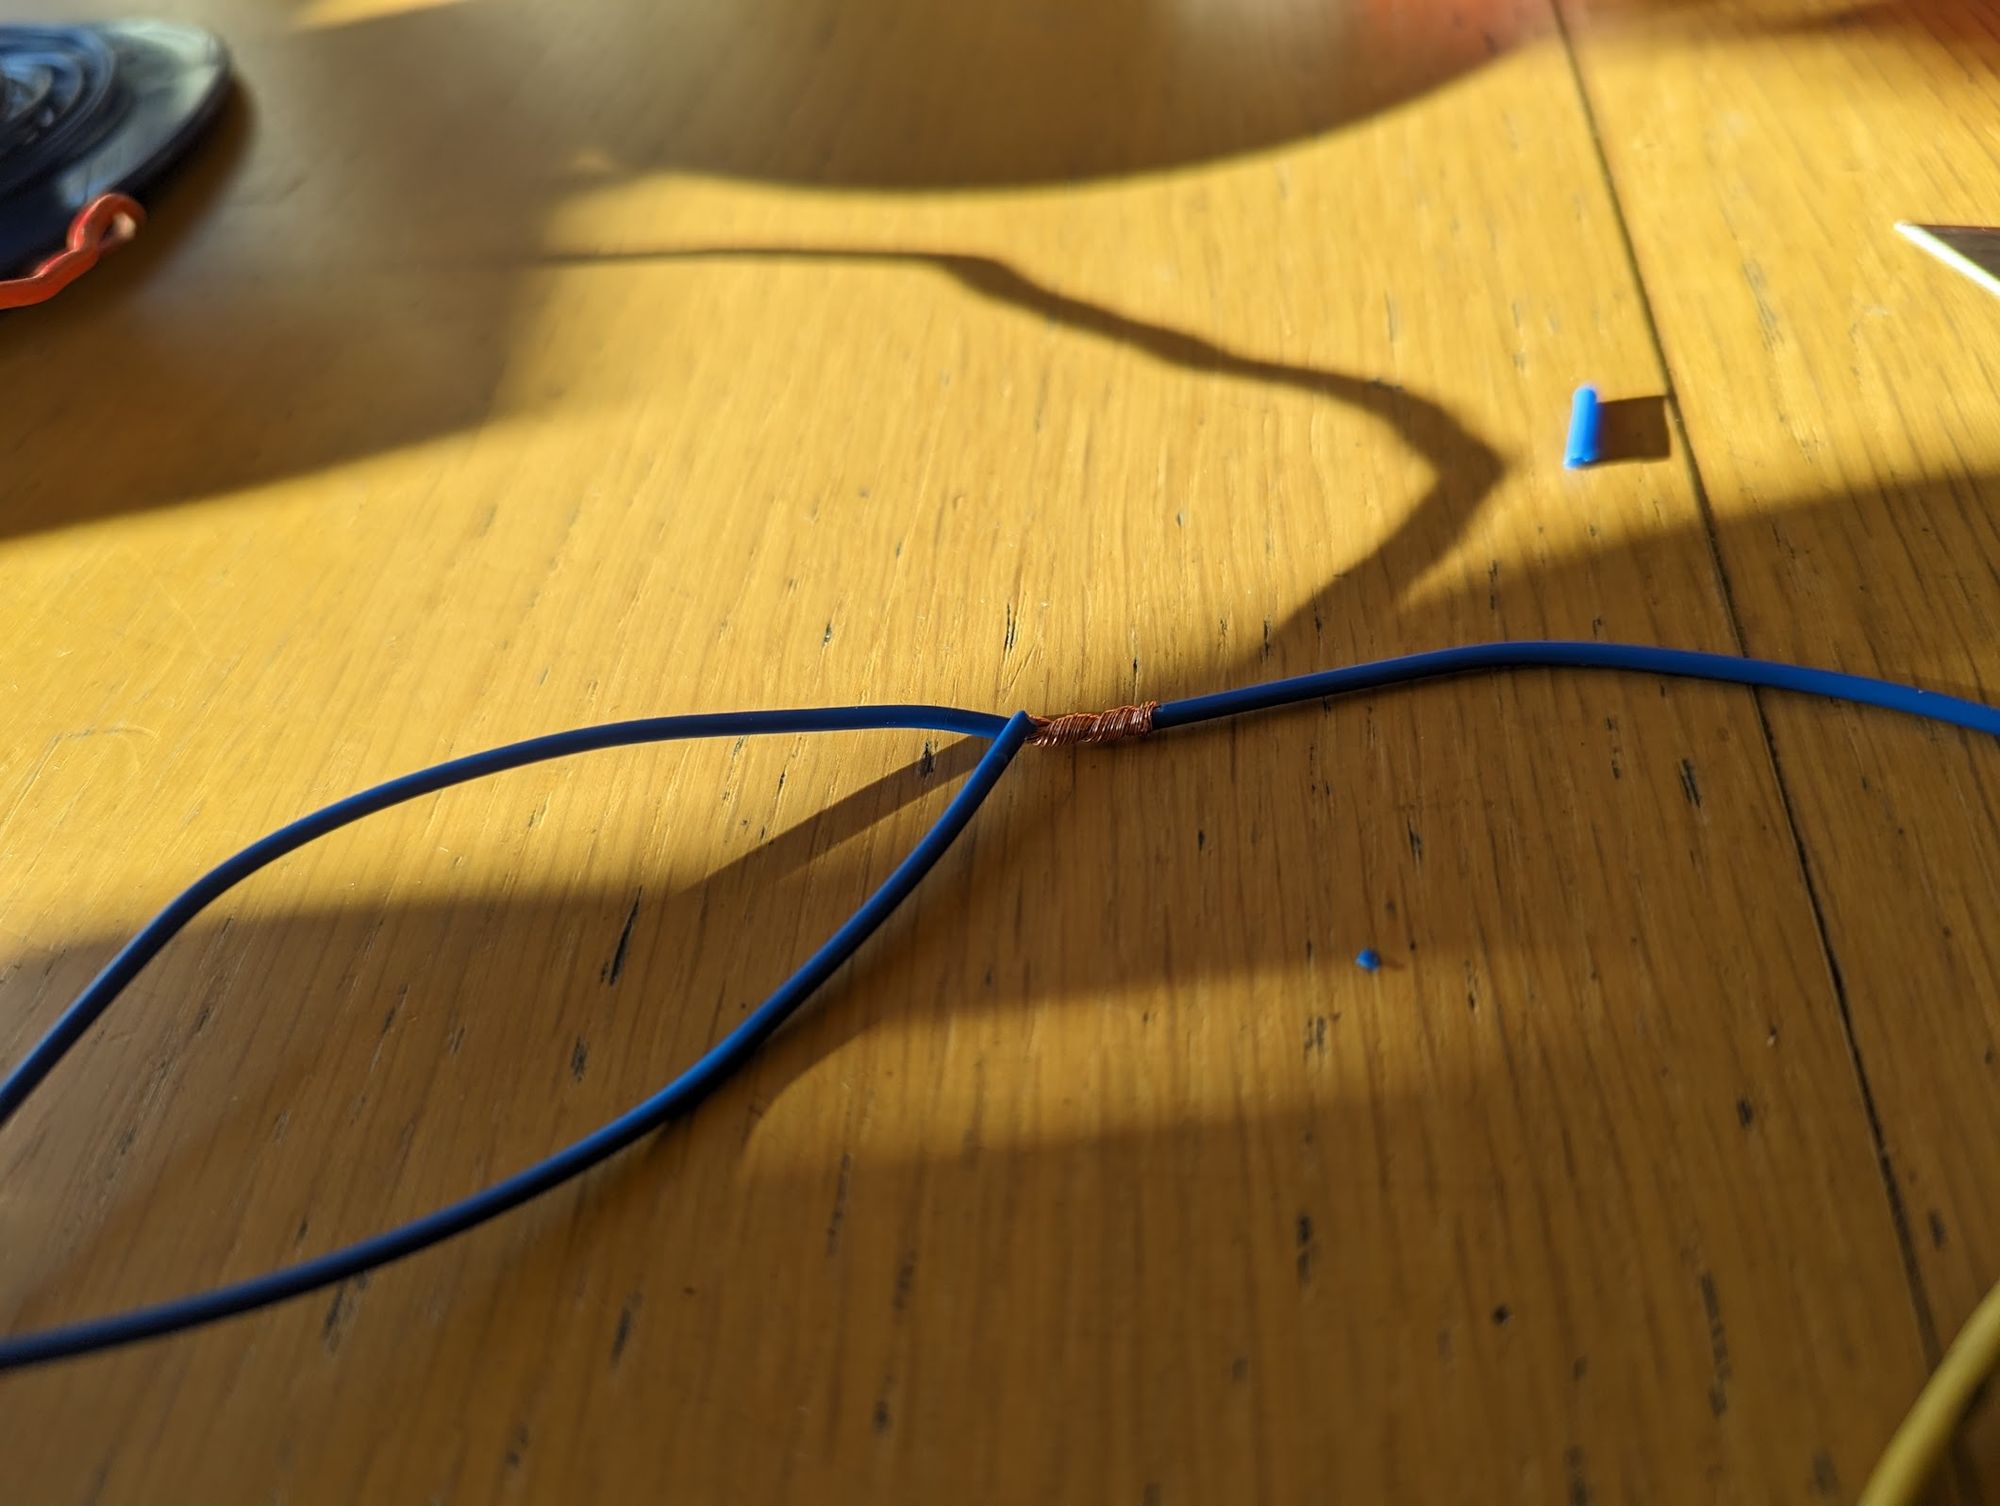 Honda CT90 - making a wiring harness